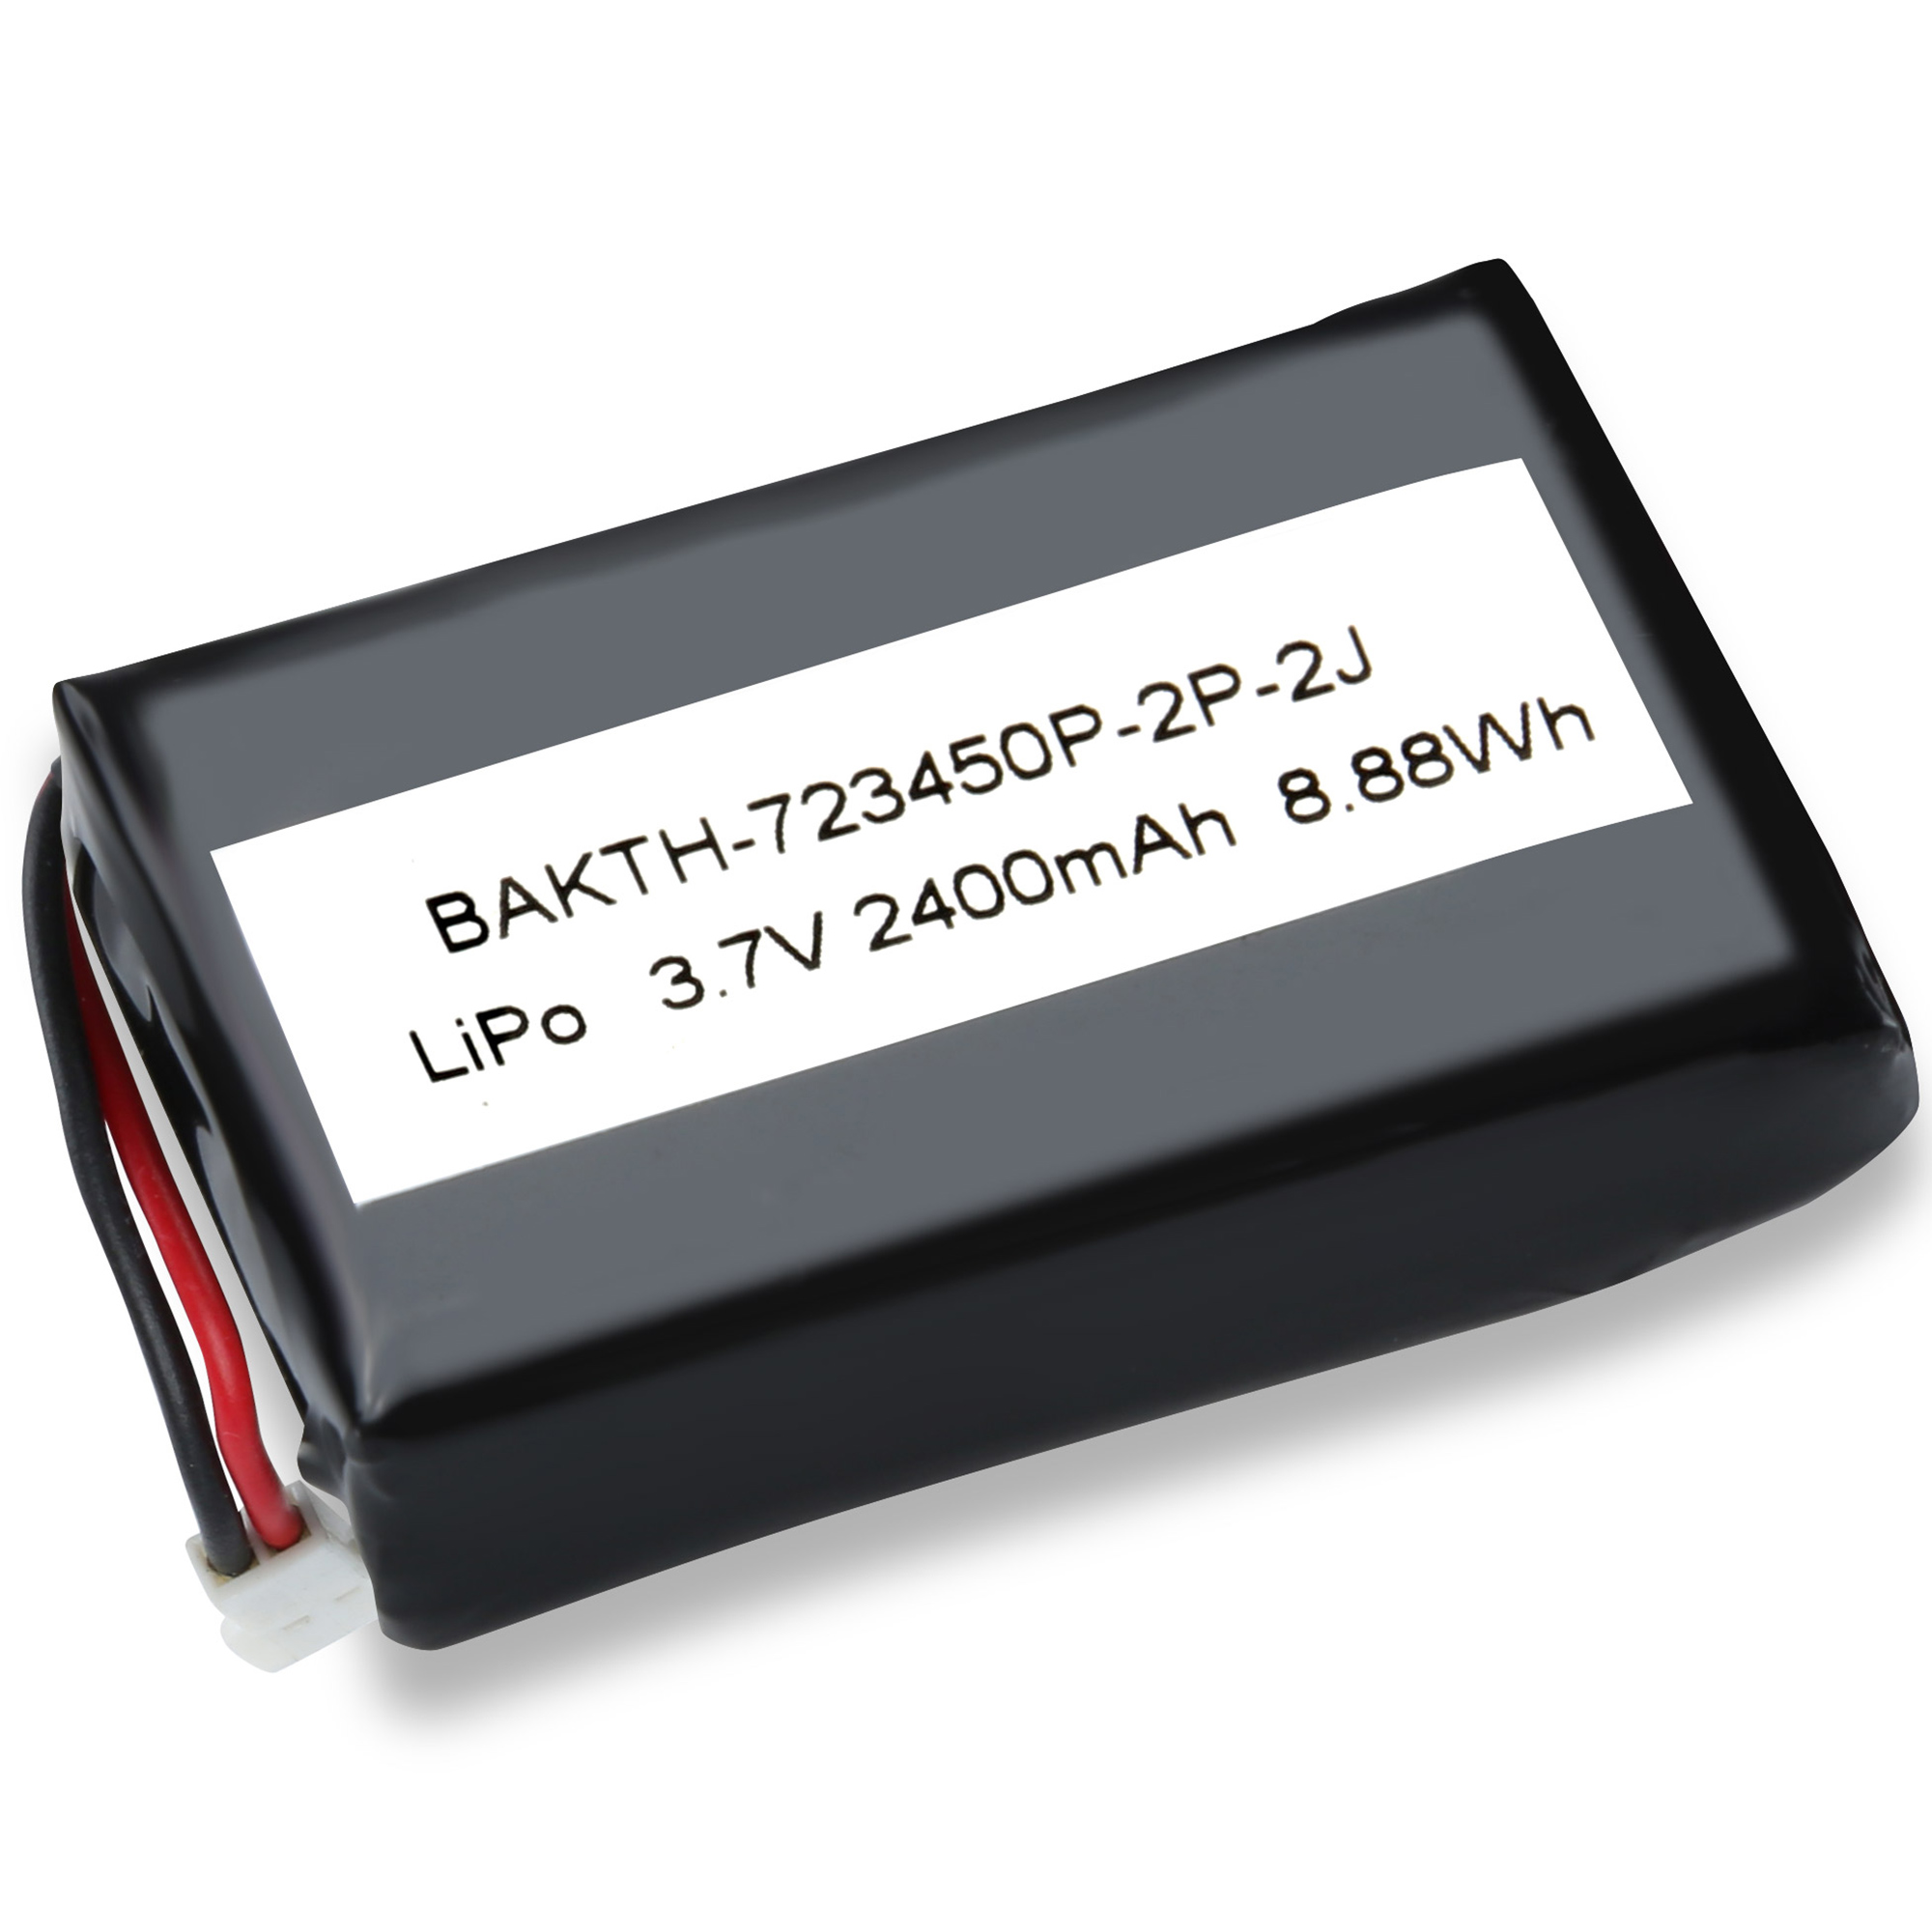 BAKTH-723450P-2P-3J Перезаряжаемая литиевая полимерная батарея 3,7 В 2400 мАч аккумулятор